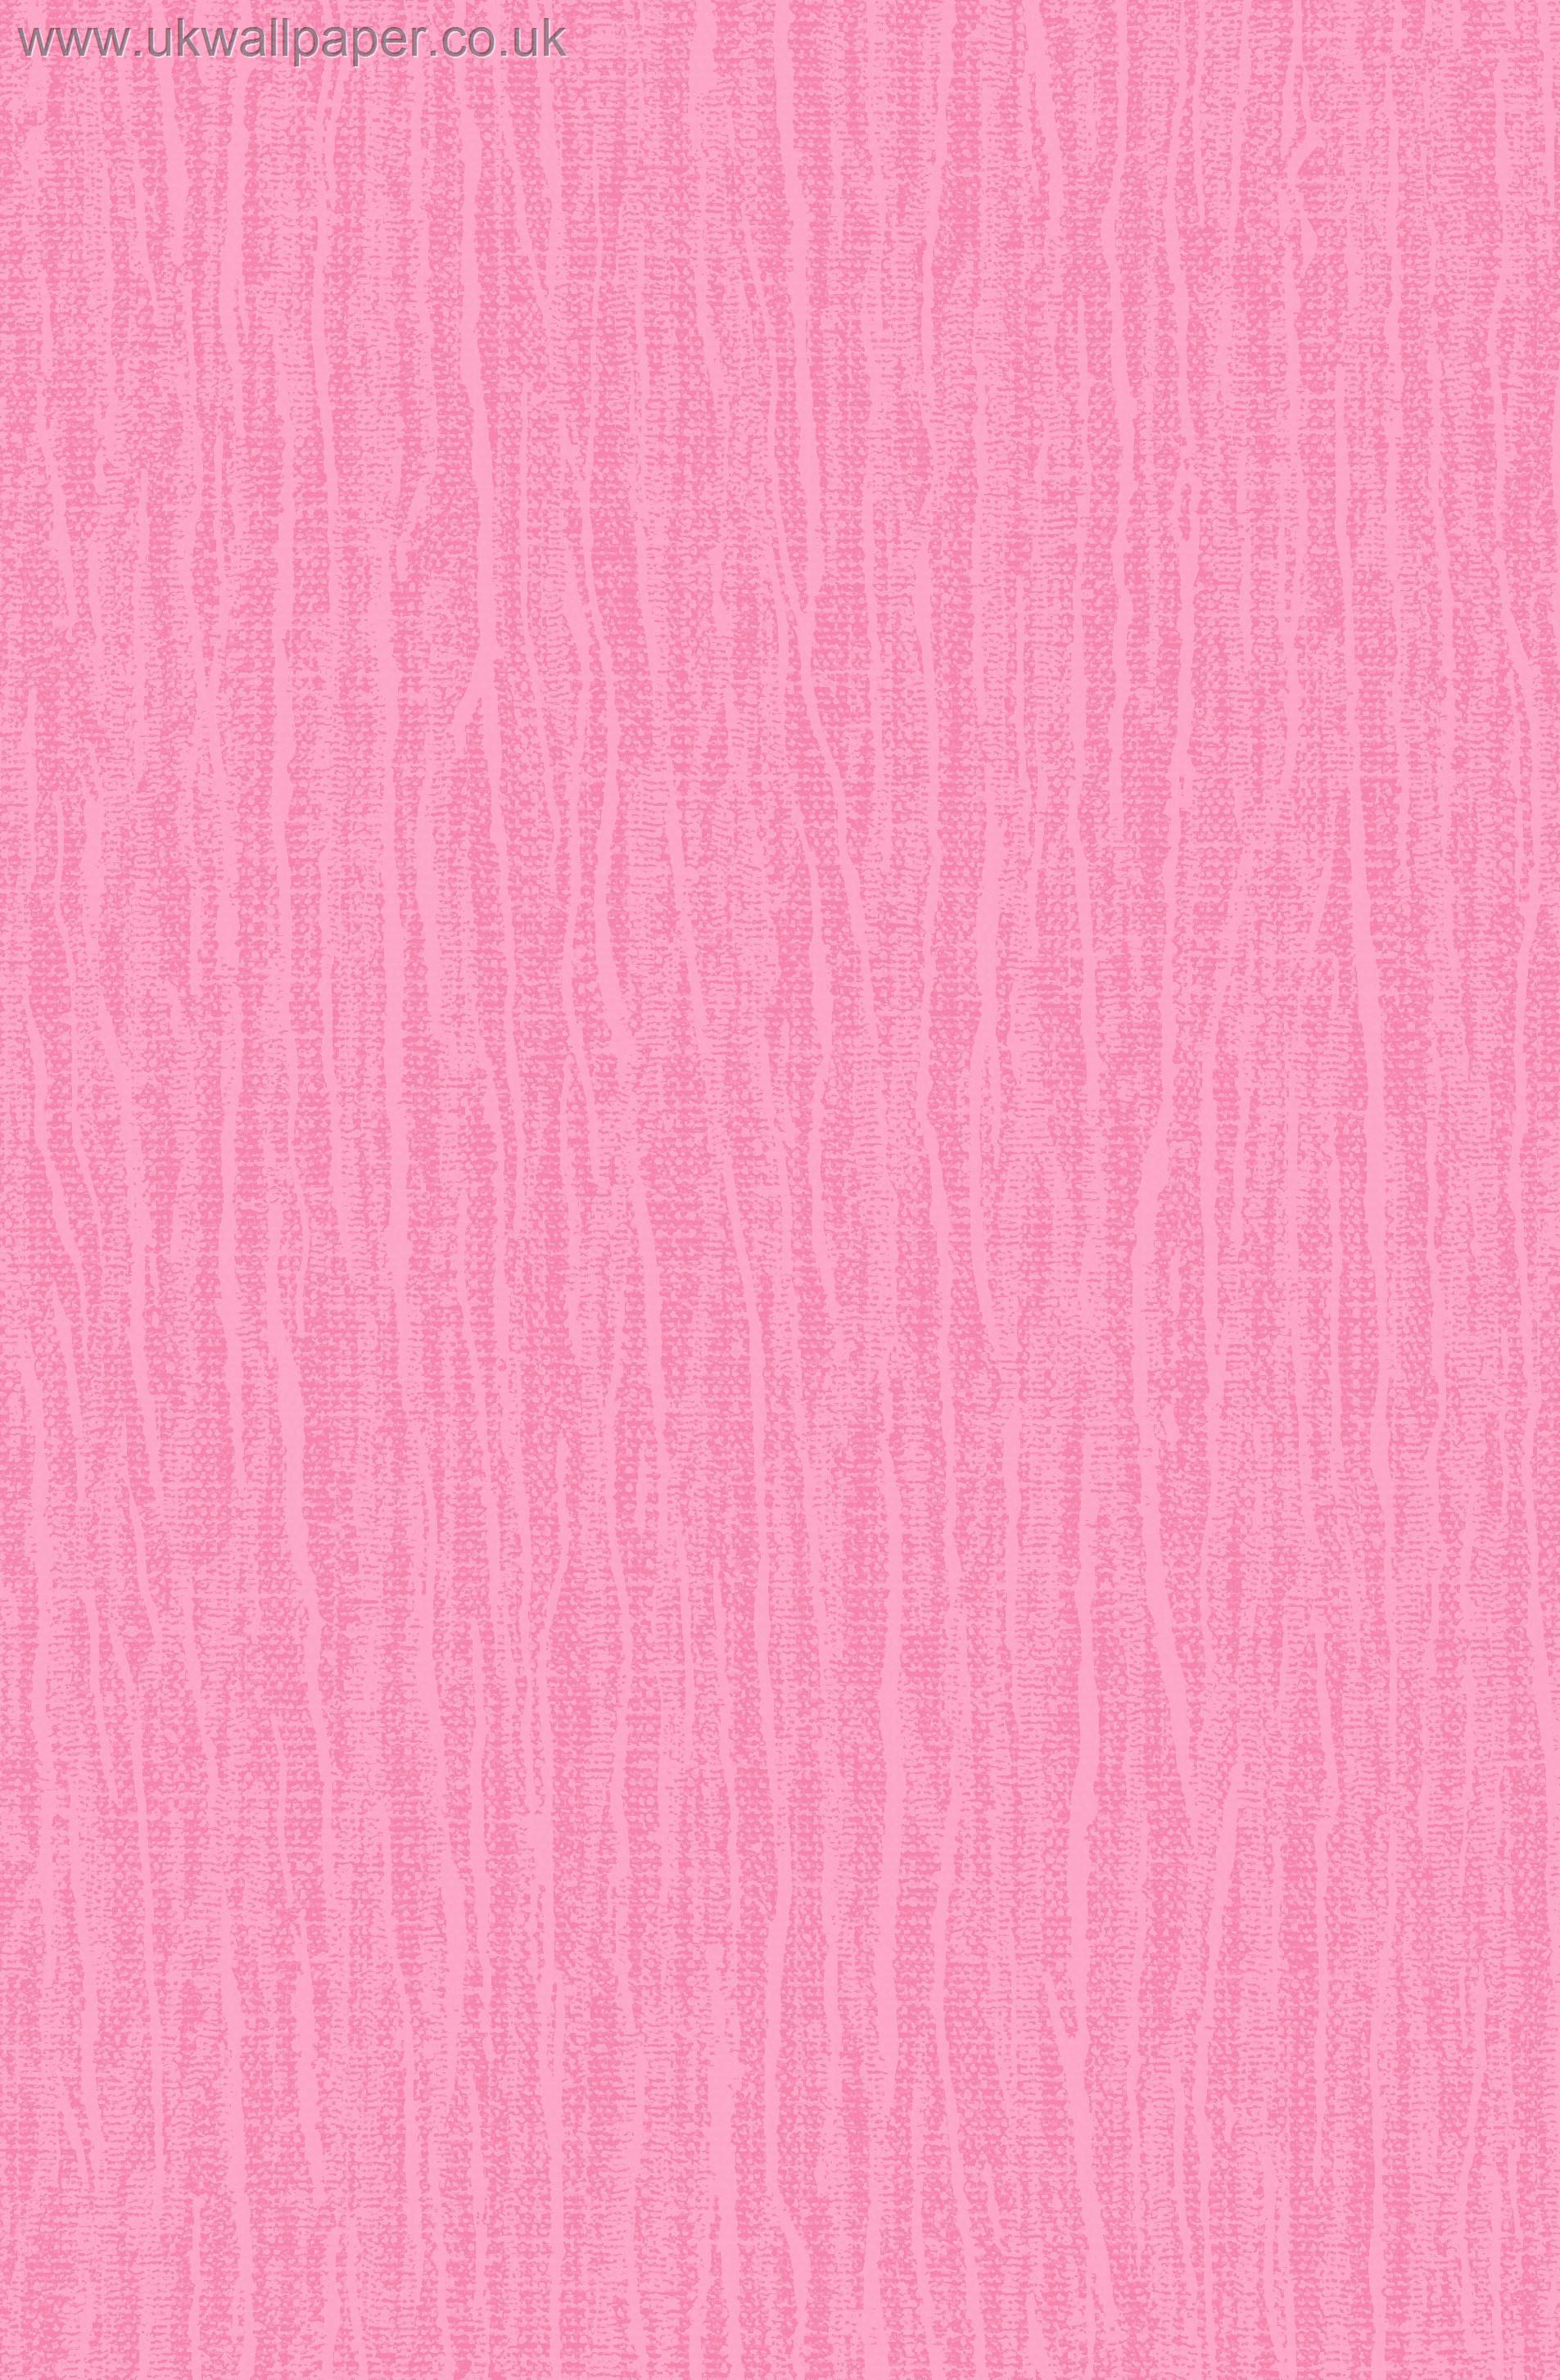  wallpaper plain pink wallpaper 10metres x 52cm random match